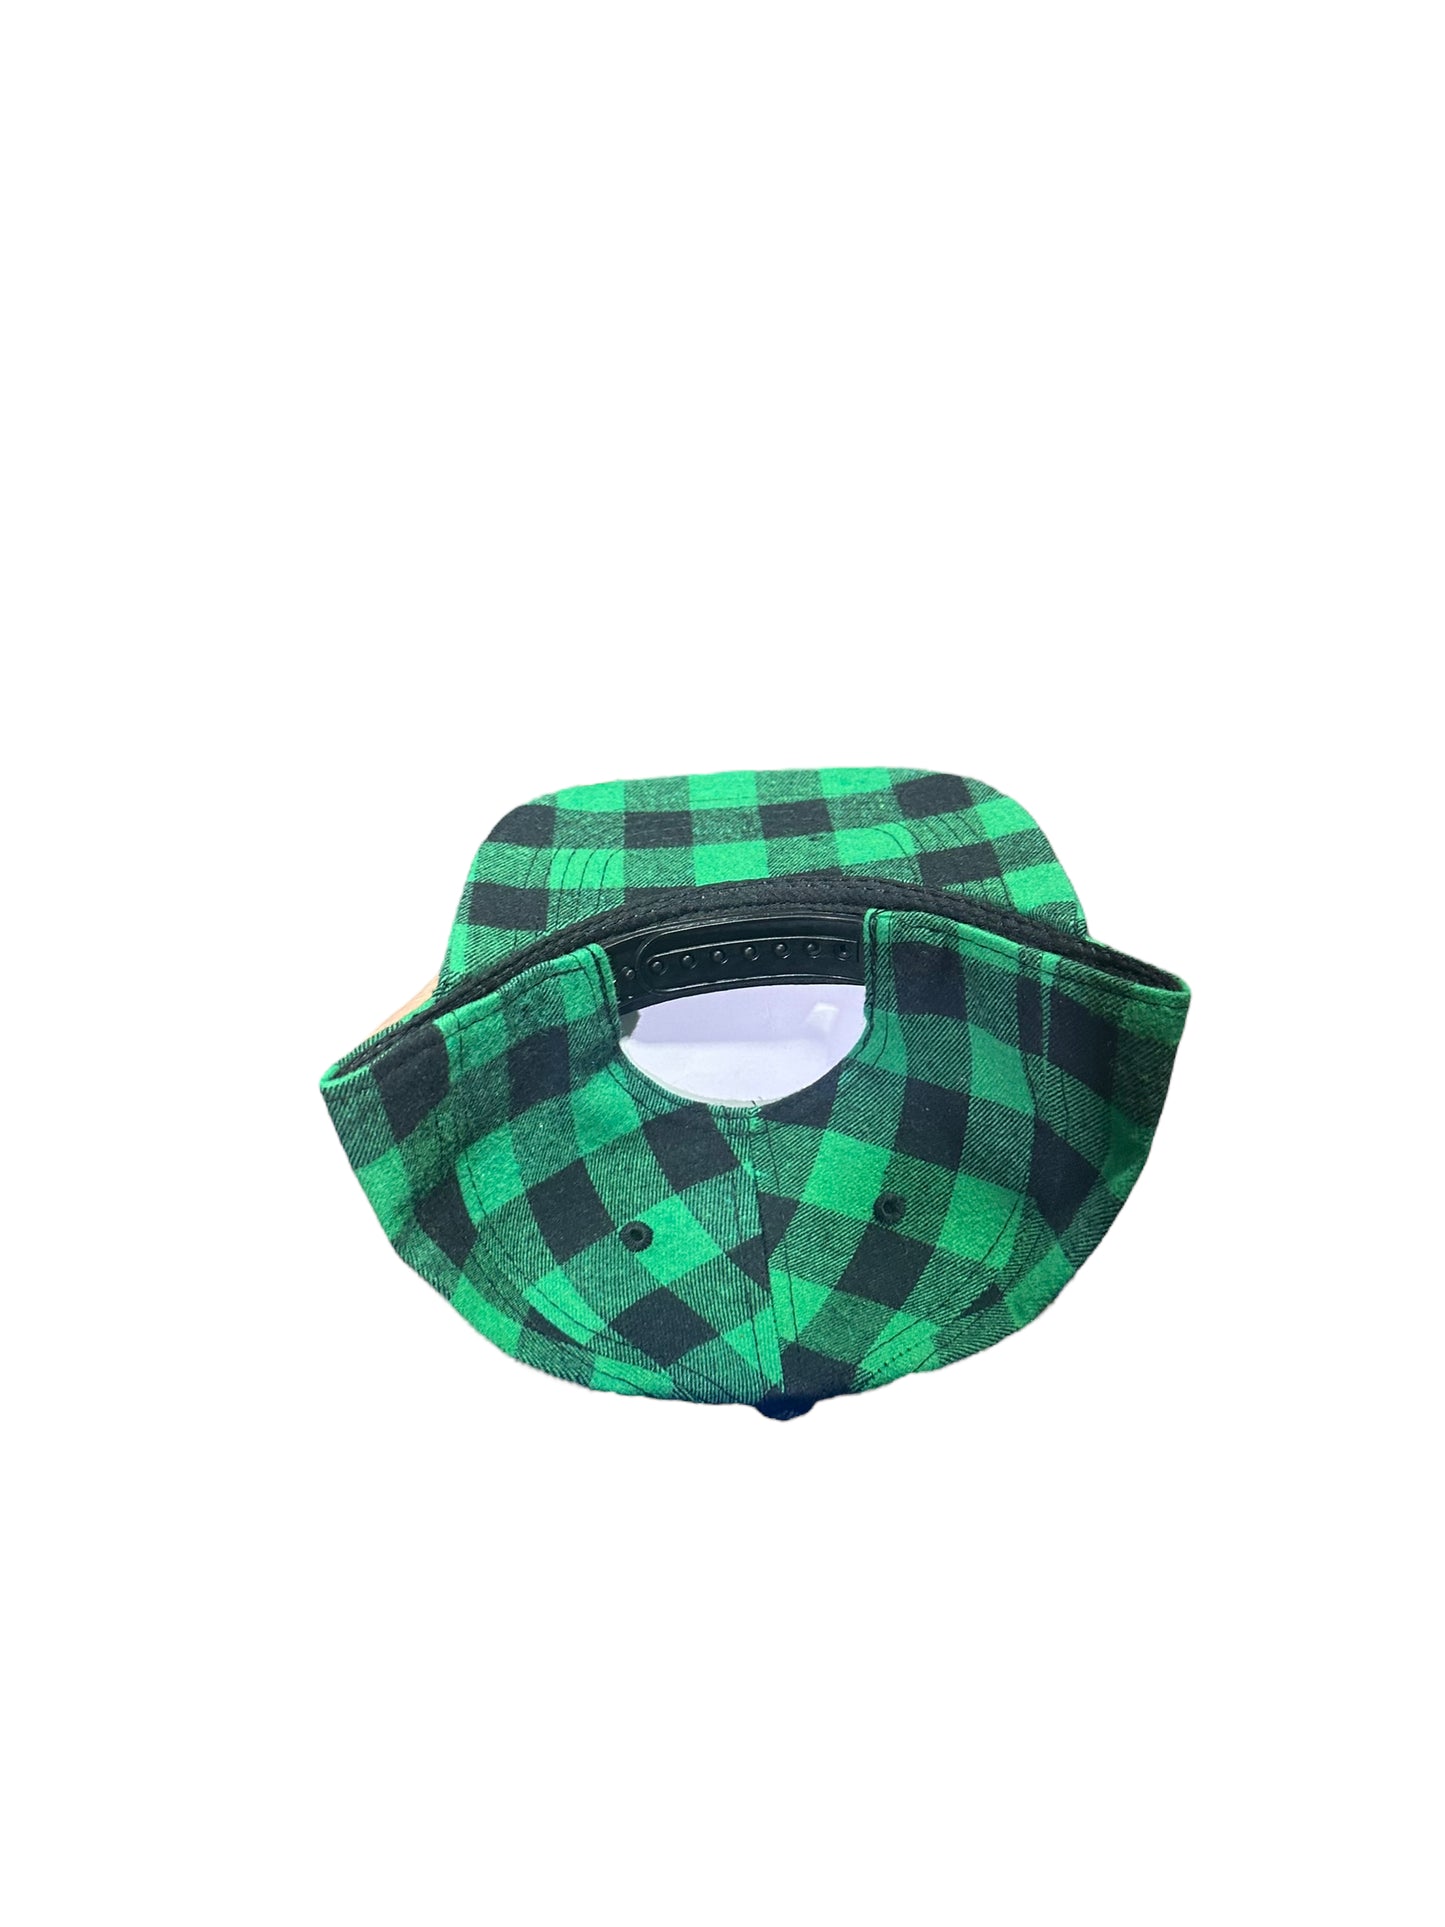 Baby hats- Green plaid SnapBacks